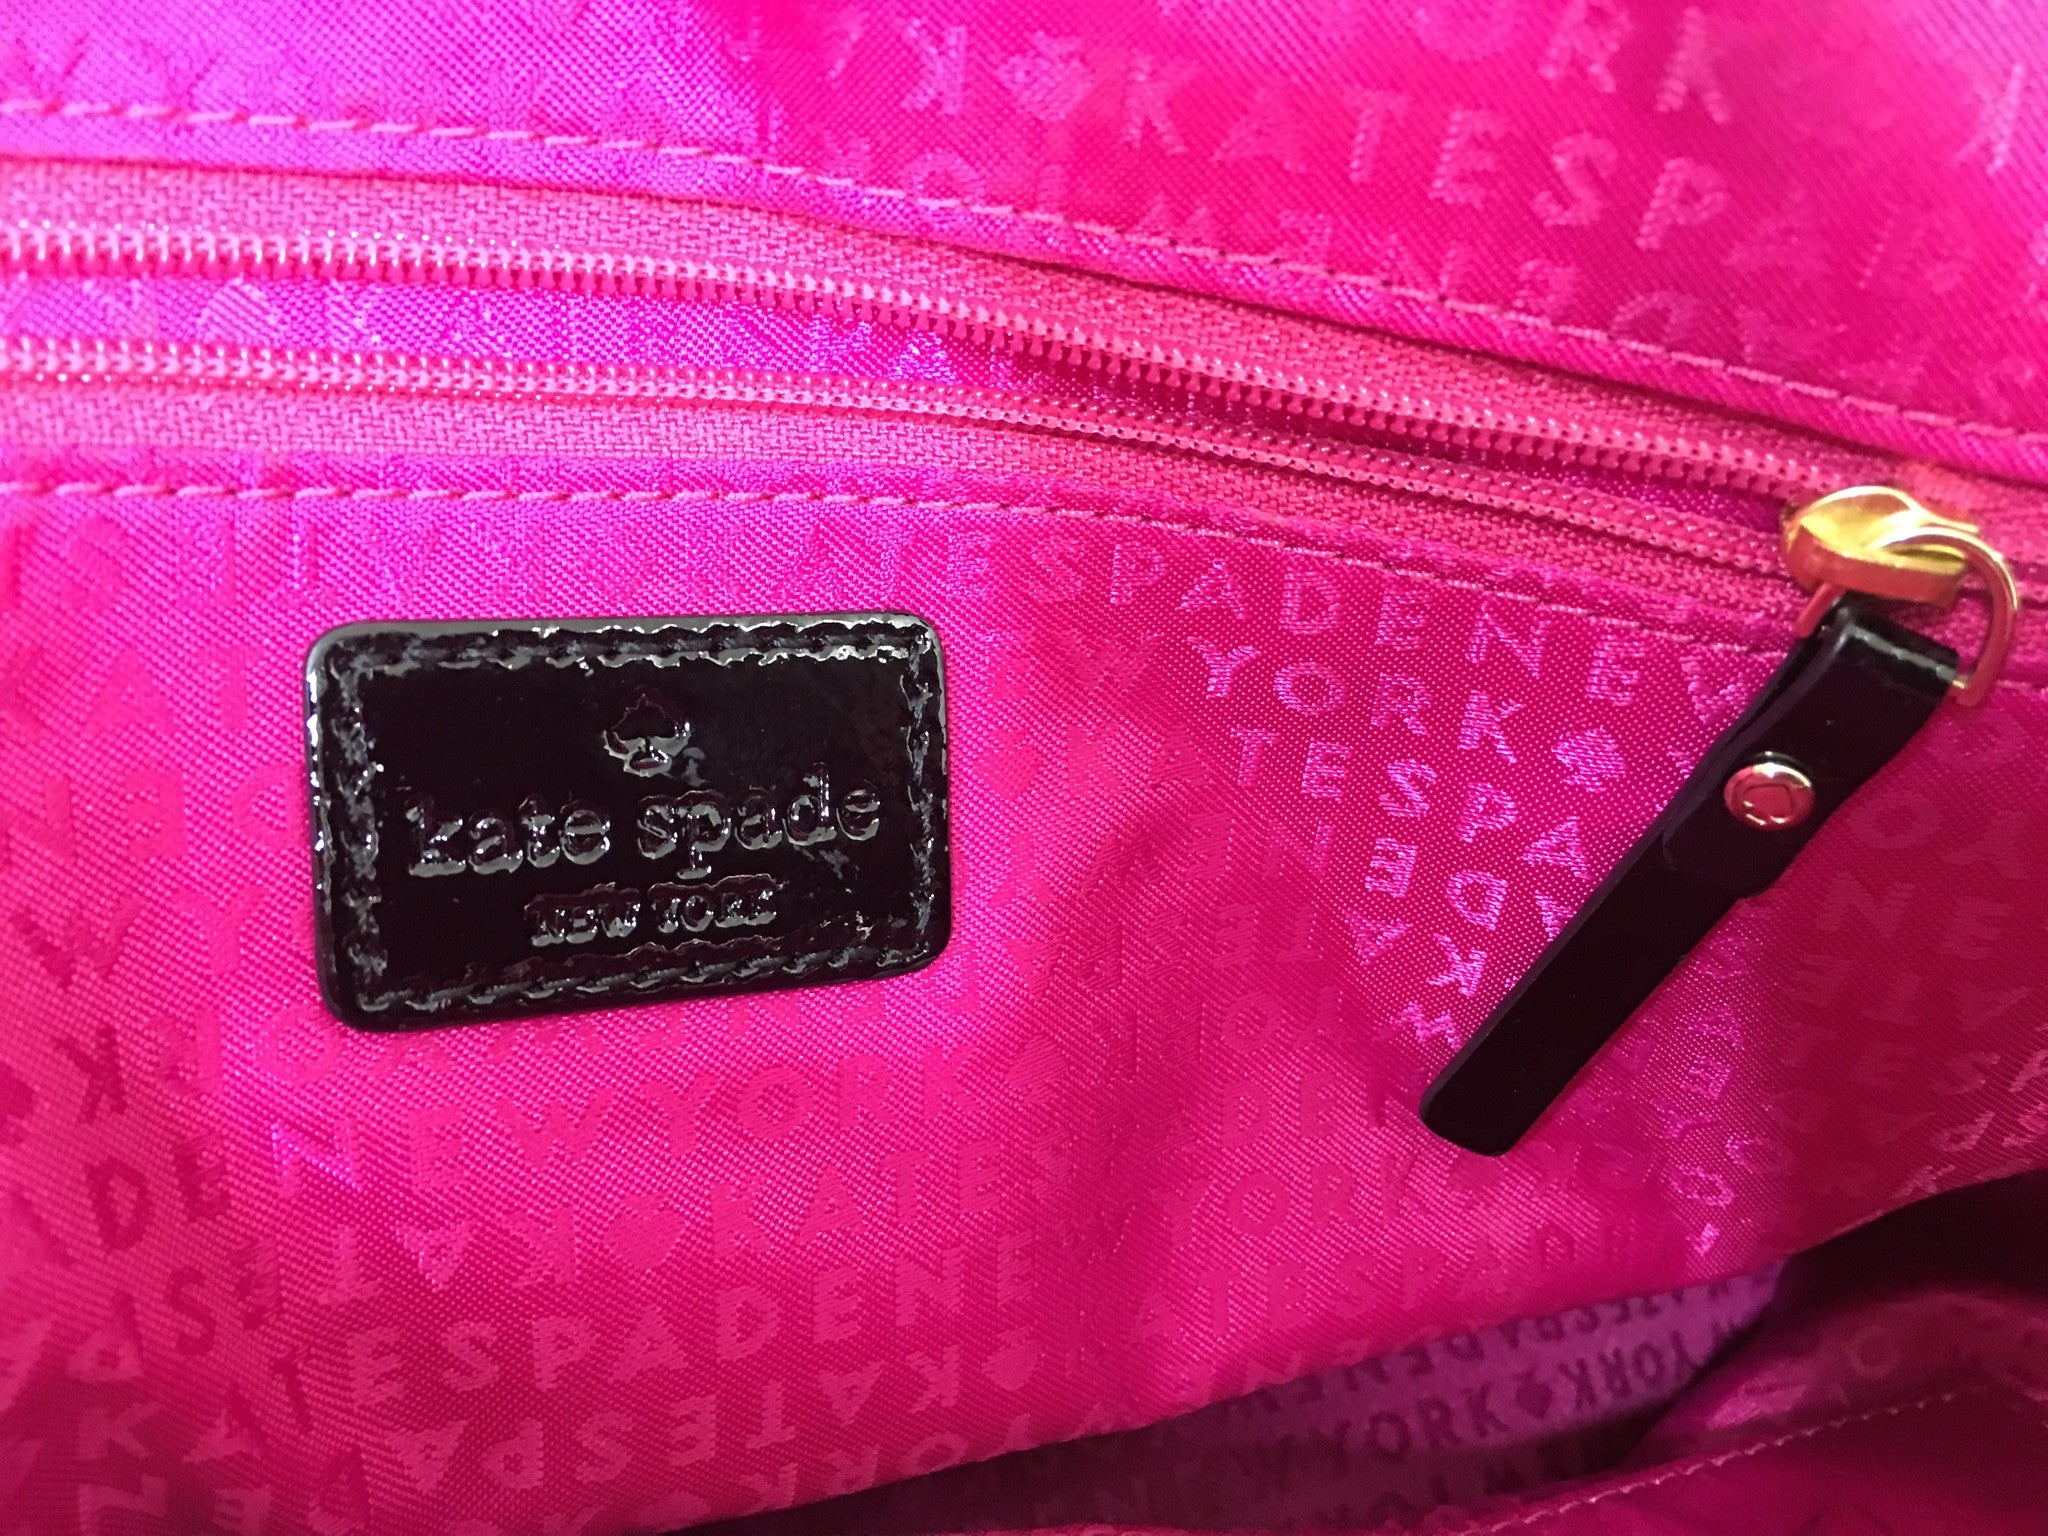 KATE SPADE Striped Satchel Handbag